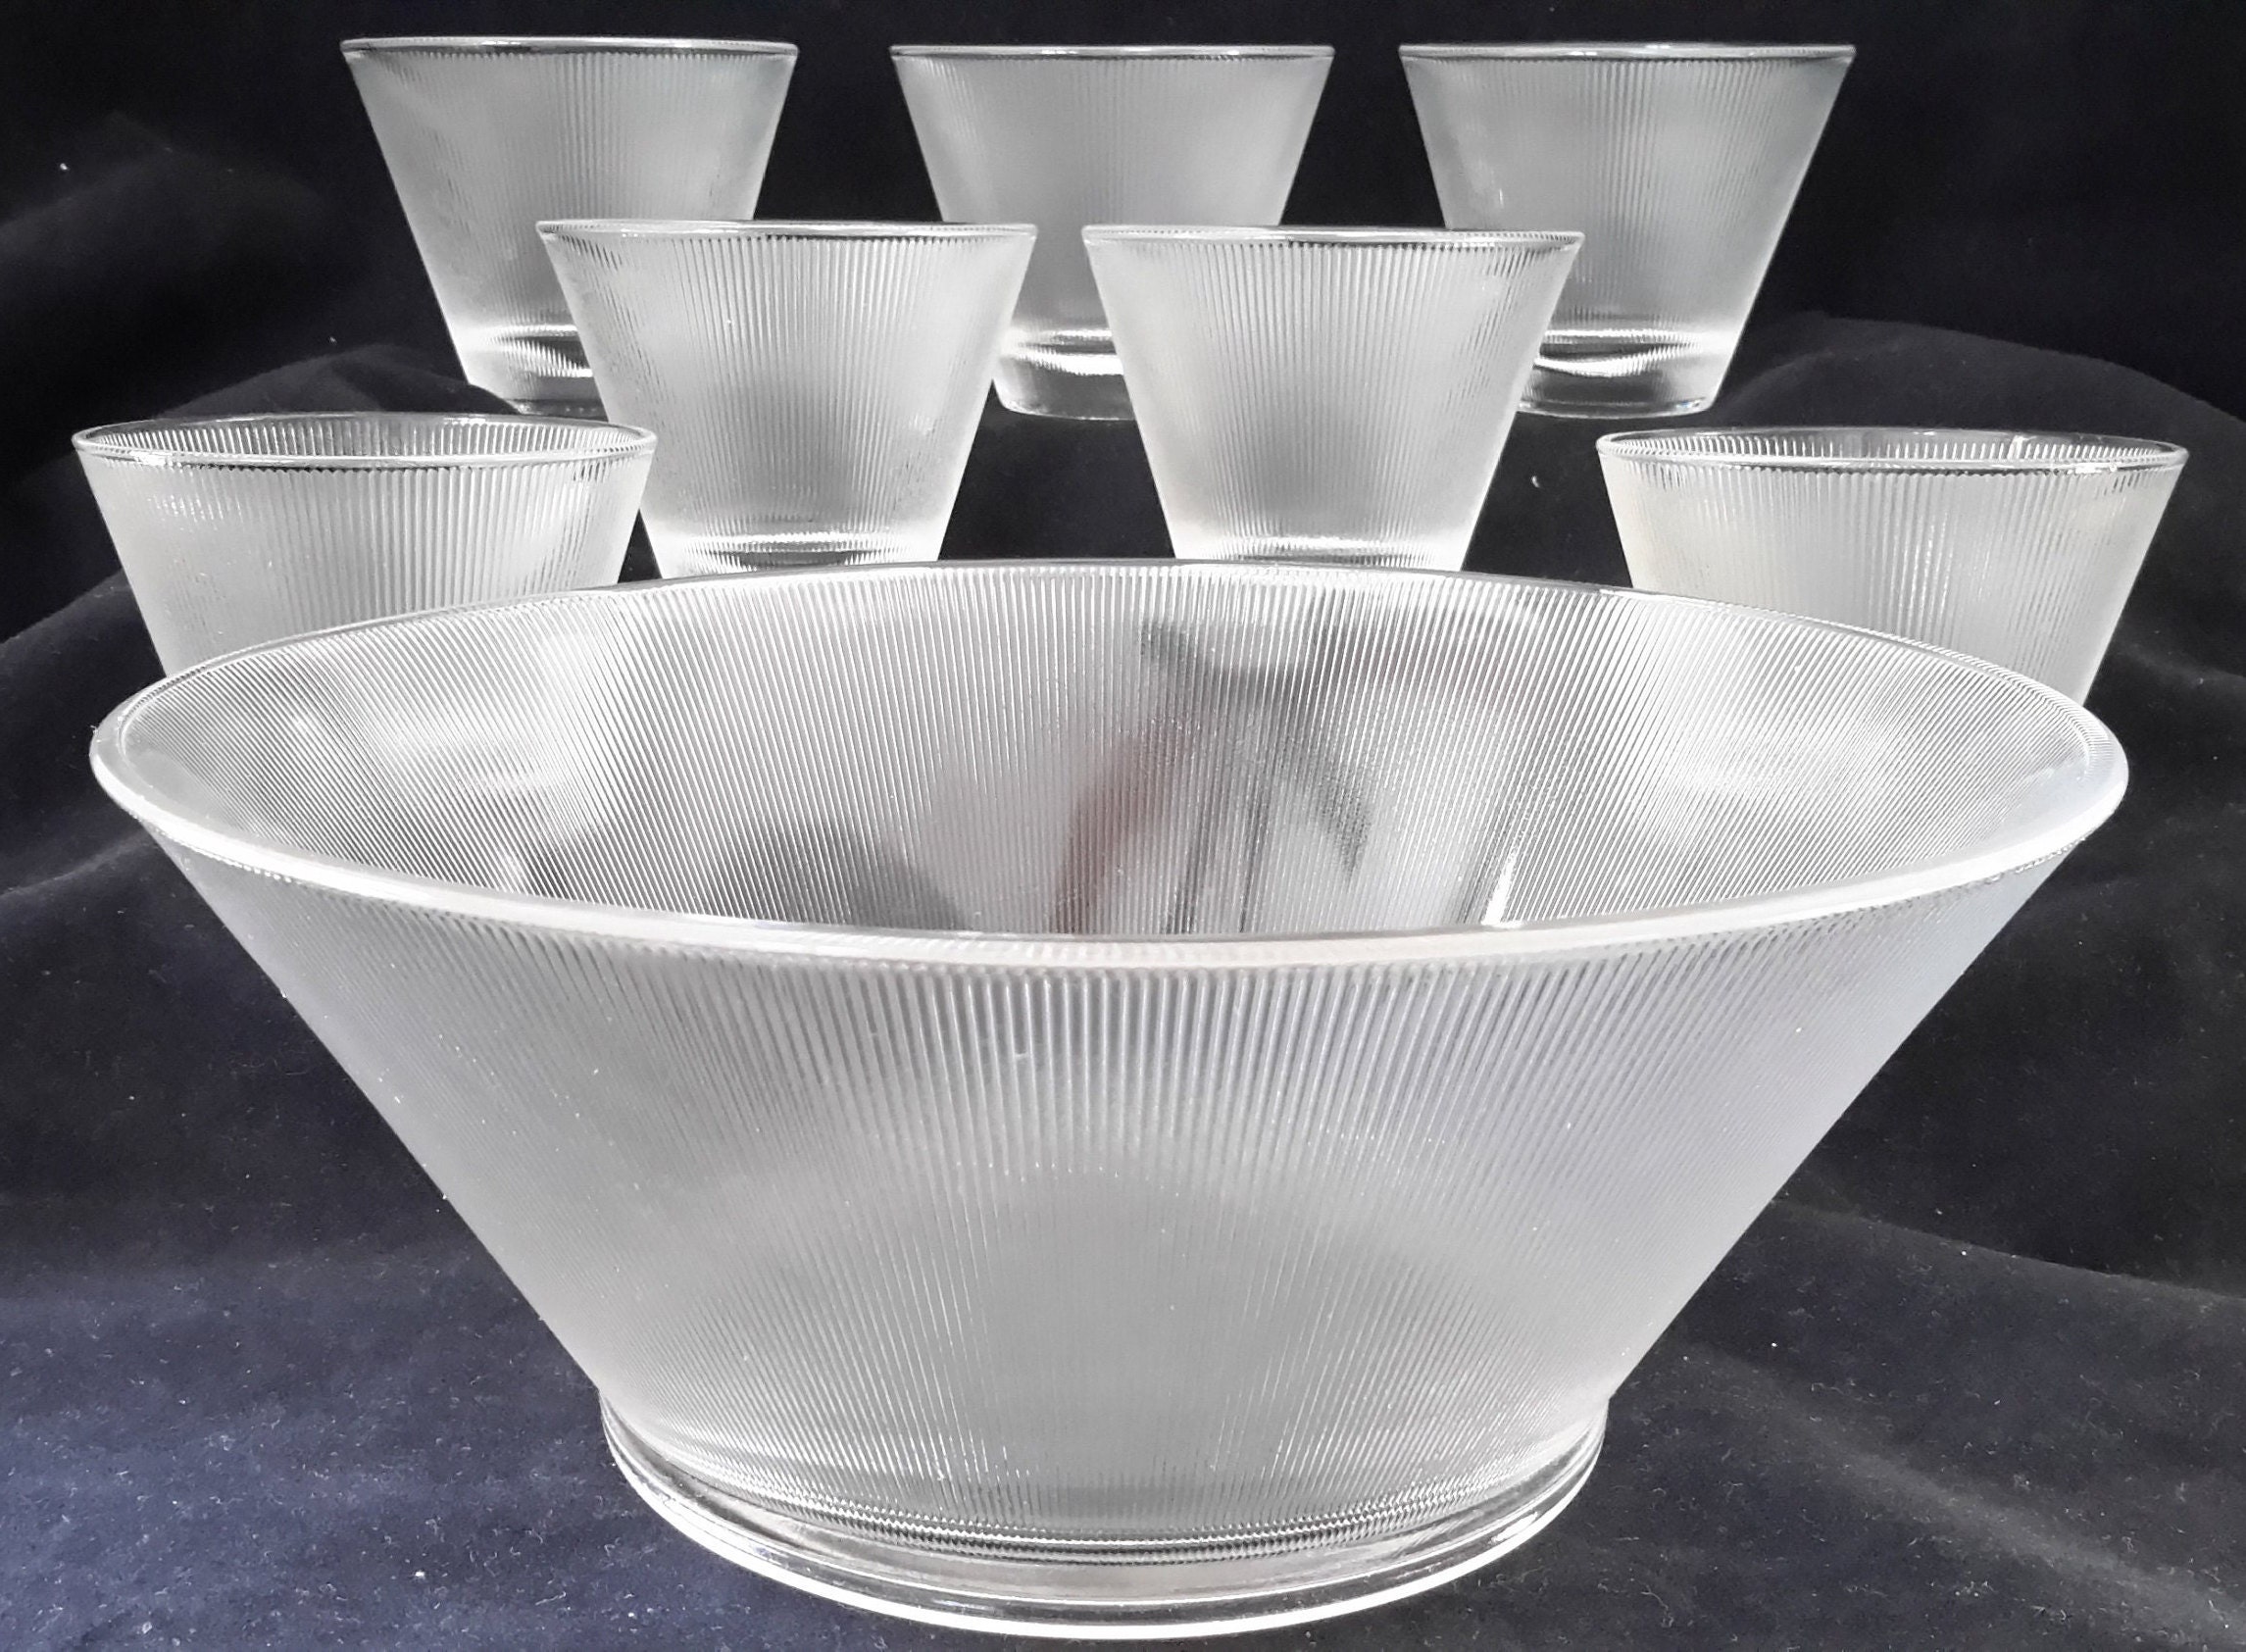 KEMORELA ribbed glass cups set, 13oz vintage drinking glassware set, 6  piece premium glassware, elegant mixed glassware set, origami s